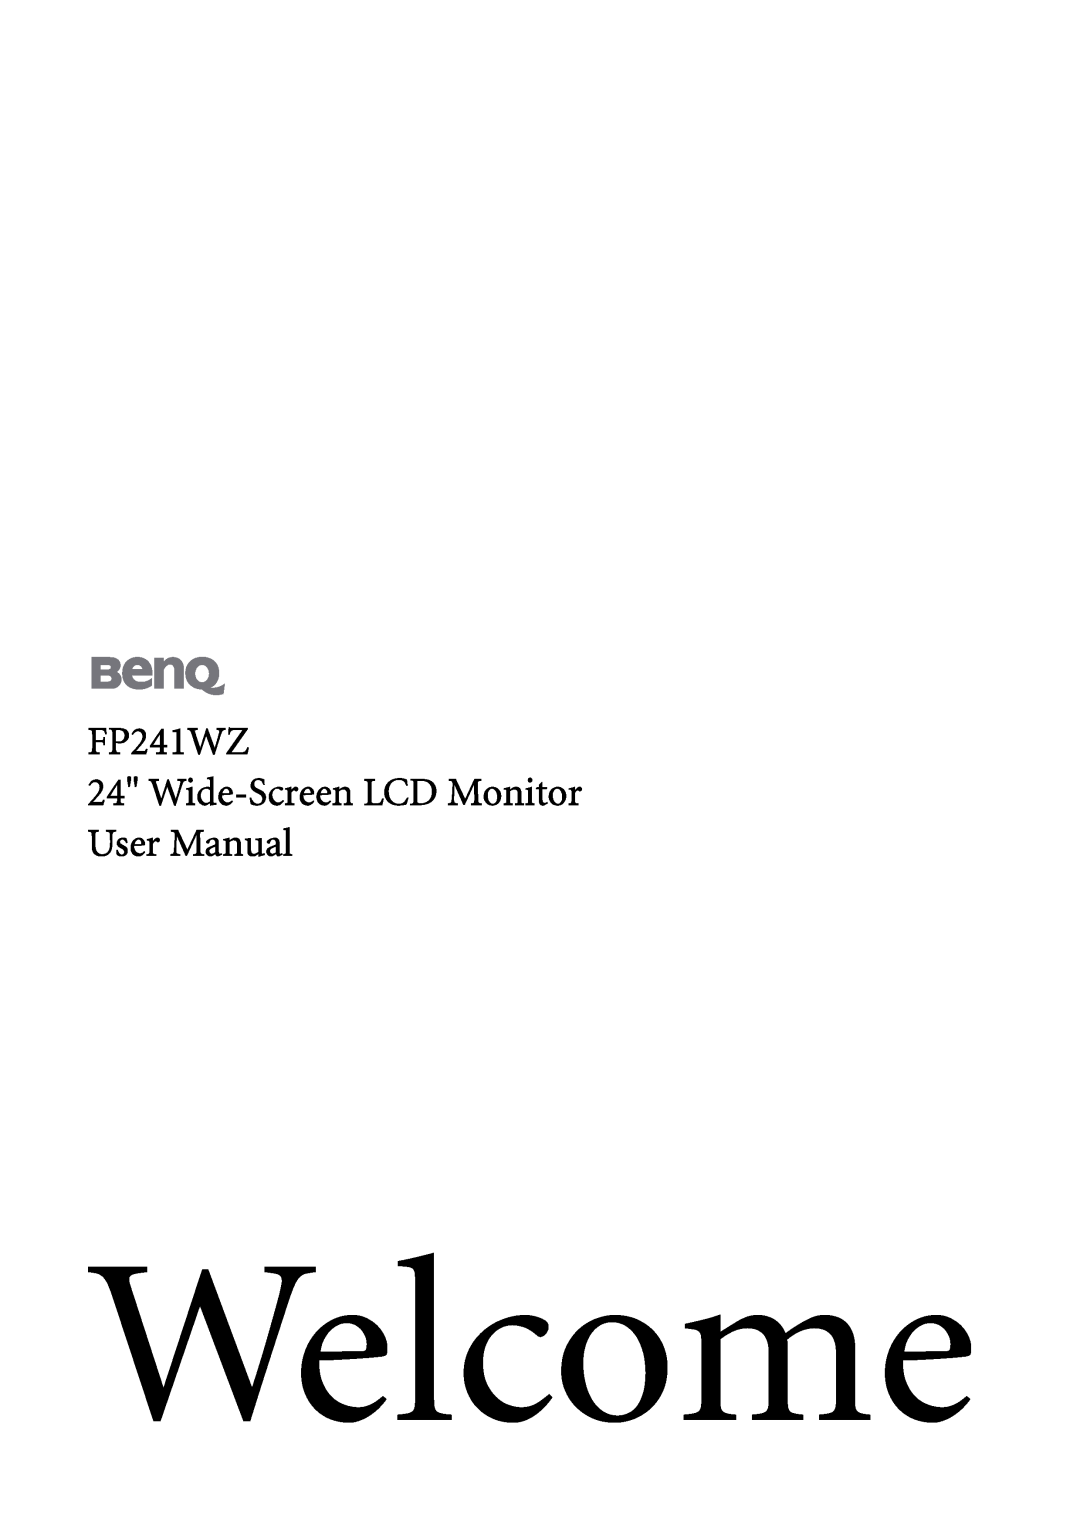 BenQ user manual Welcome, FP241WZ 24 Wide-Screen LCD Monitor User Manual 